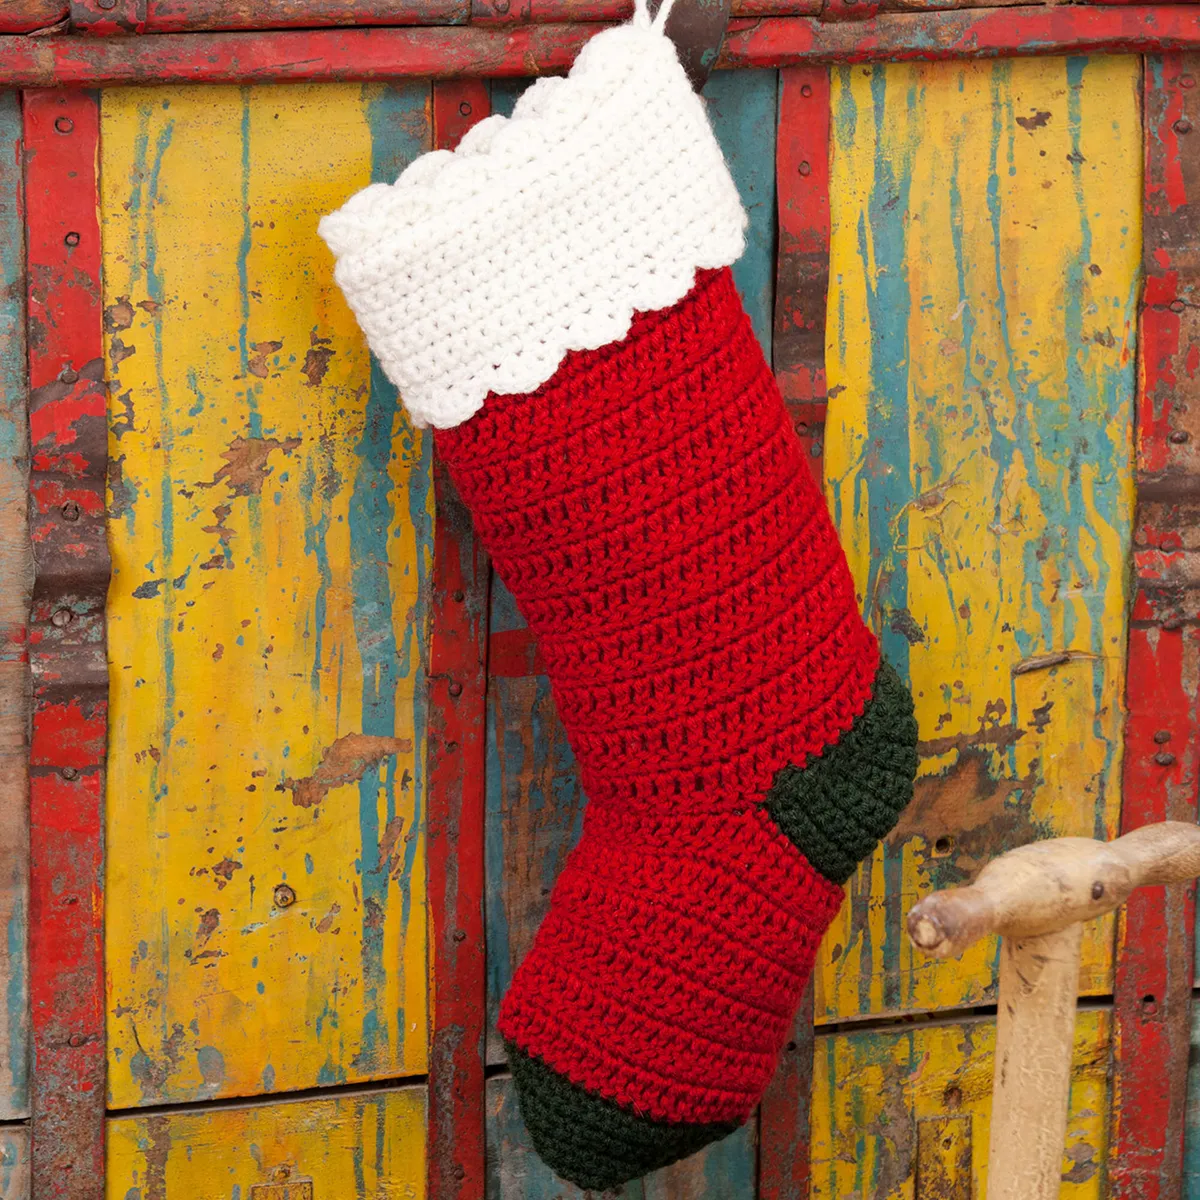 Red heart free crochet Christmas stocking pattern